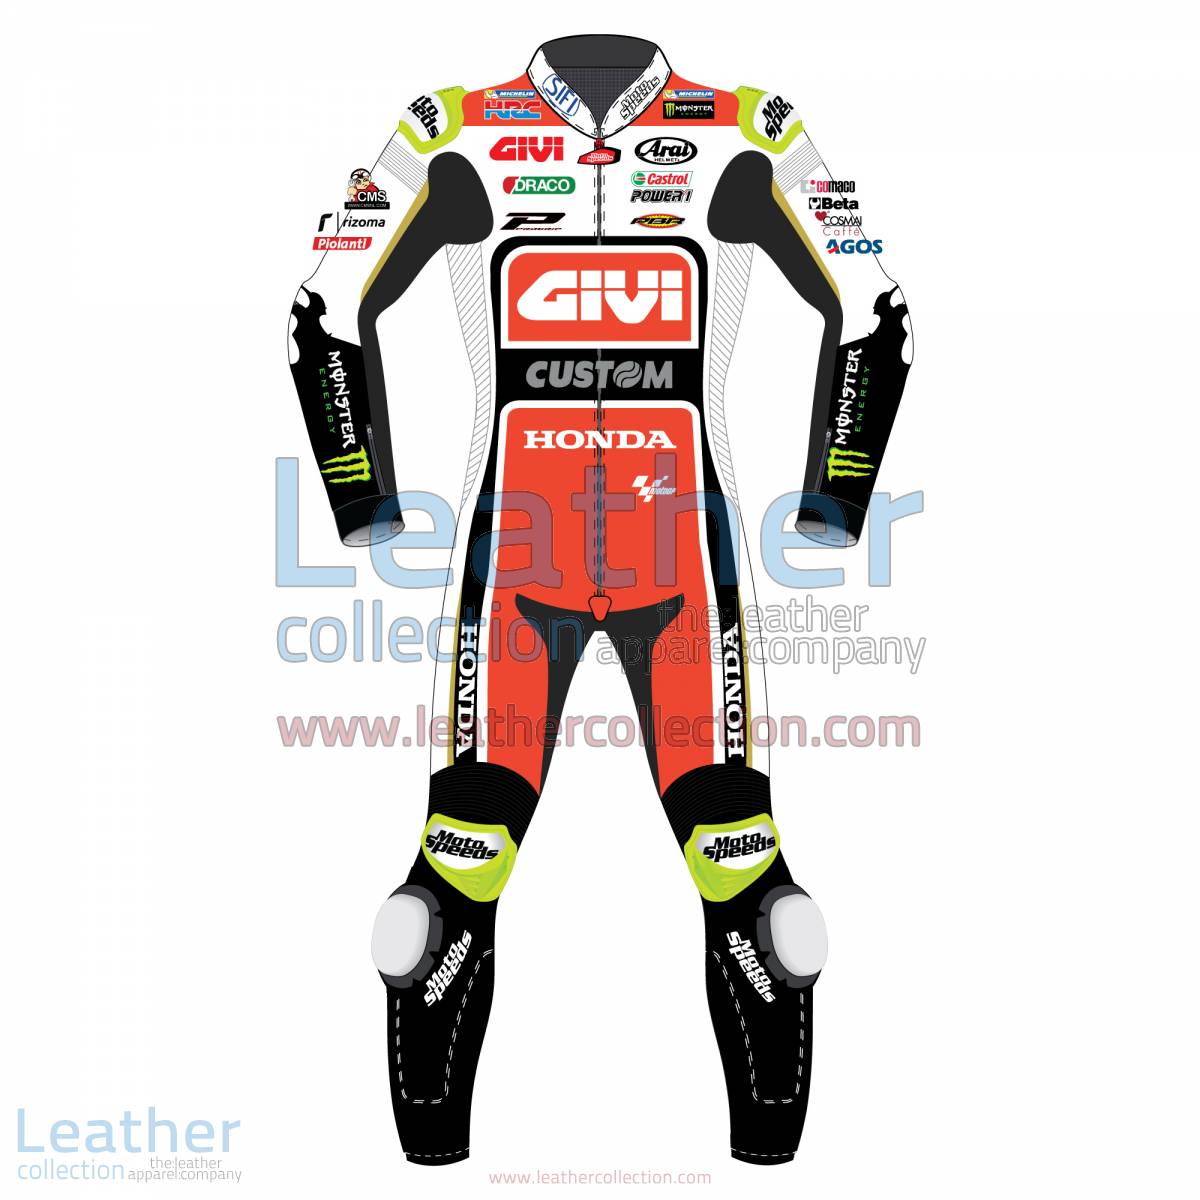 Cal Crutchlow LCR Honda 2017 MotoGP Race Suit | Cal Crutchlow LCR Honda 2017 MotoGP Race Suit